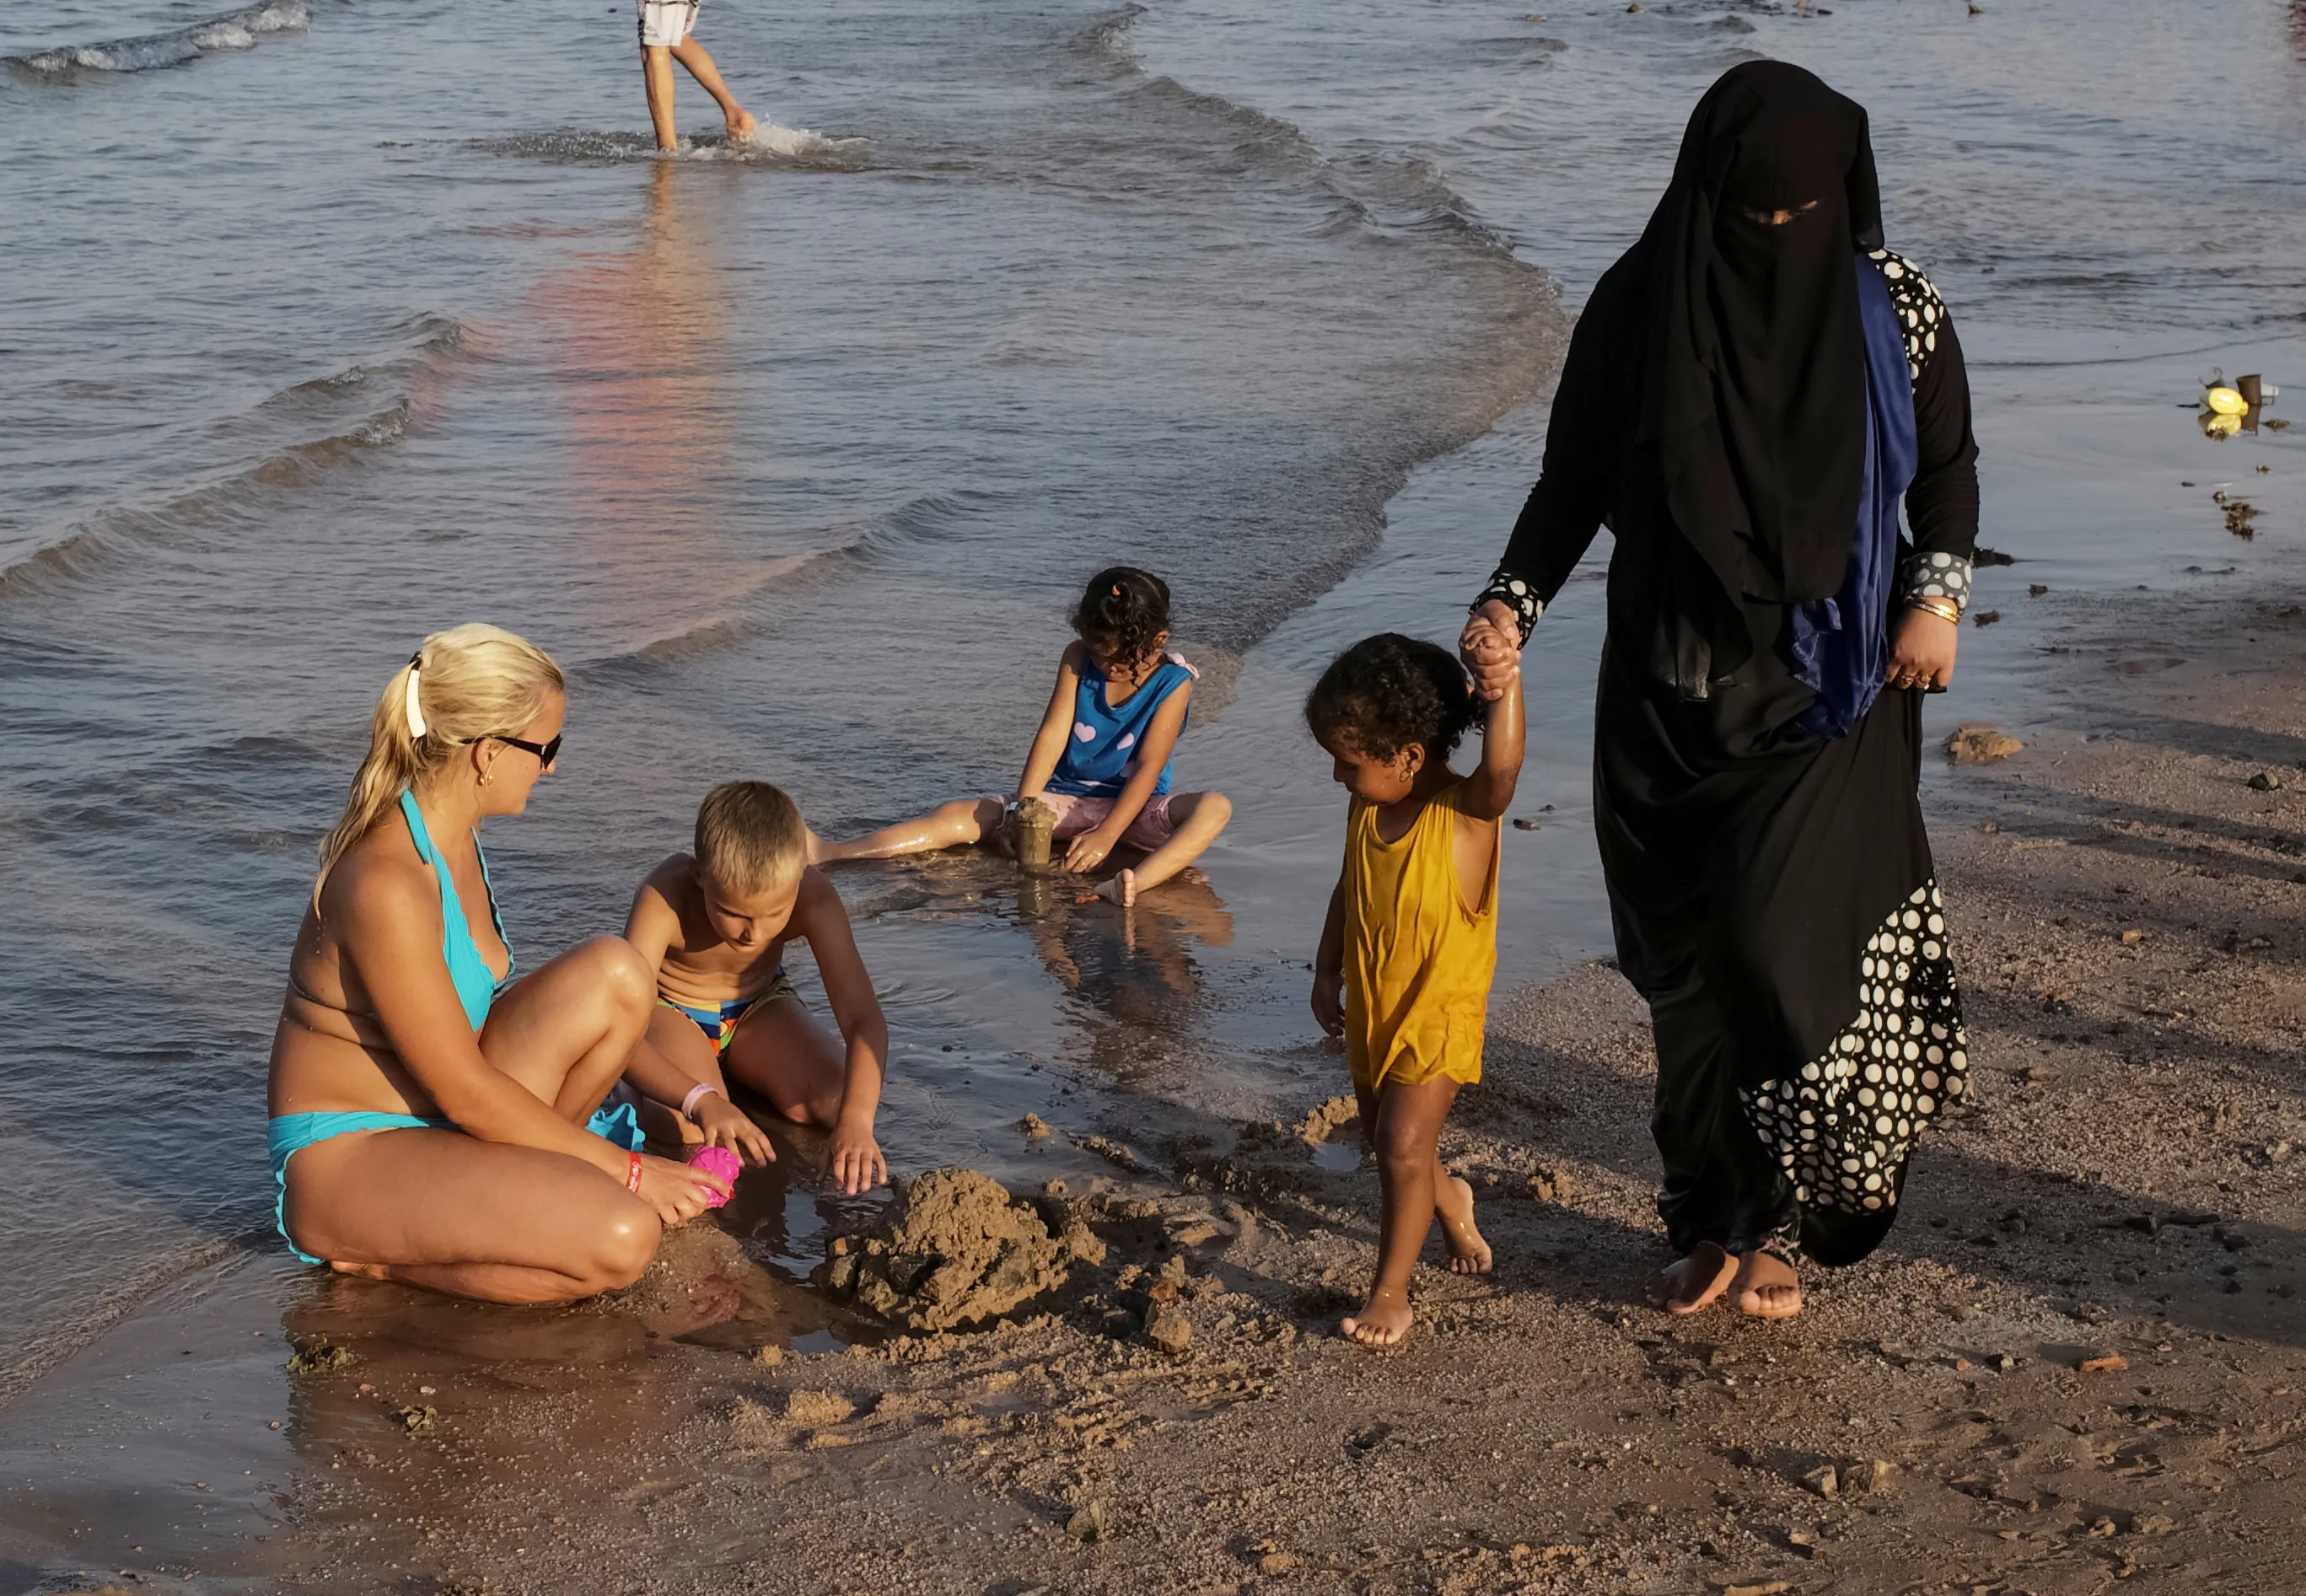 Египет купание. Буркини Хургада. Египет люди на пляже. Египет пляж дети. Египетские девушки на пляже.